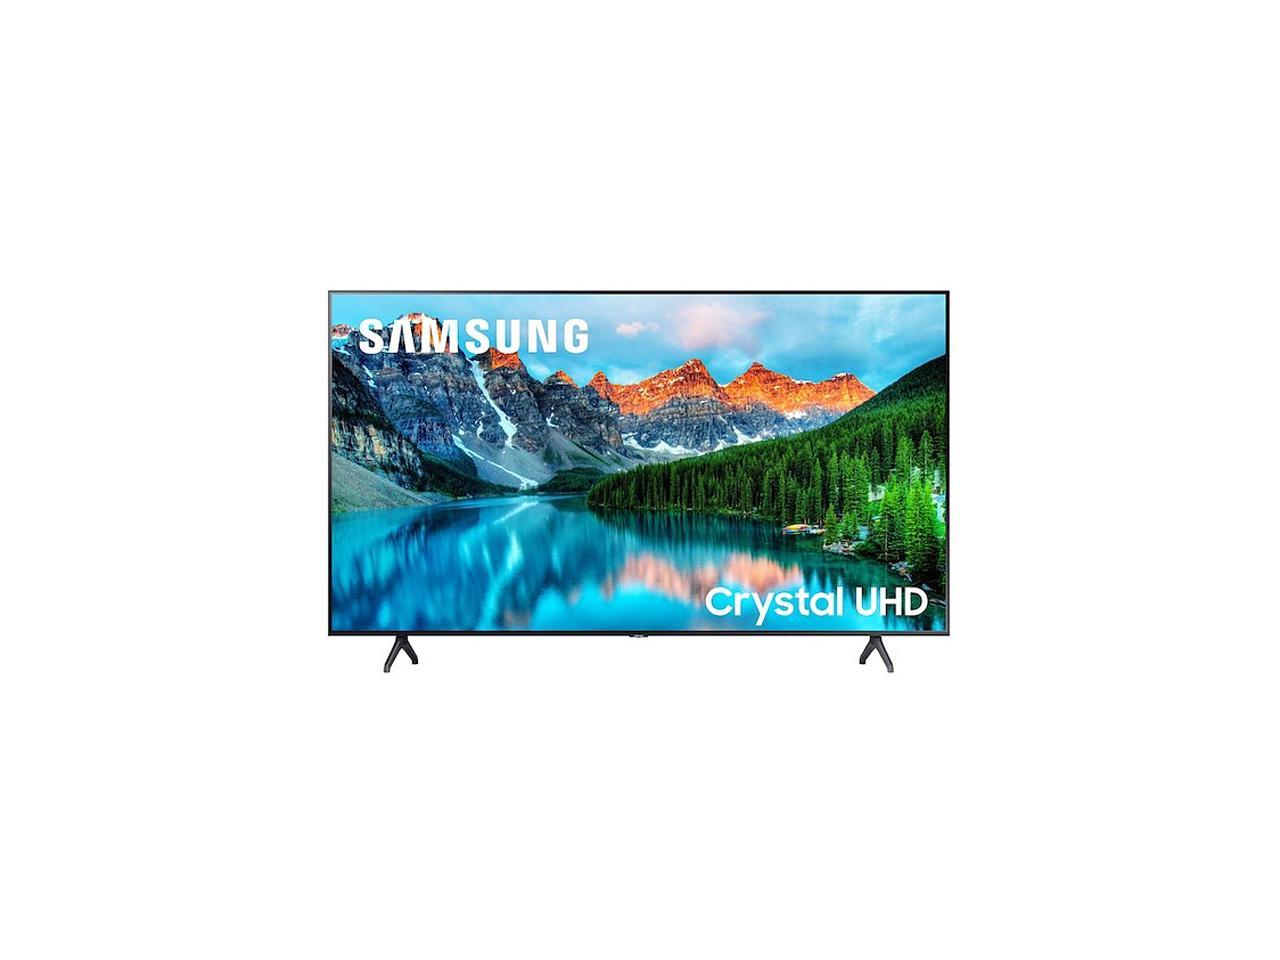 Samsung BE70T-H - BET-H Series 70" Crystal UHD 4K Pro TV